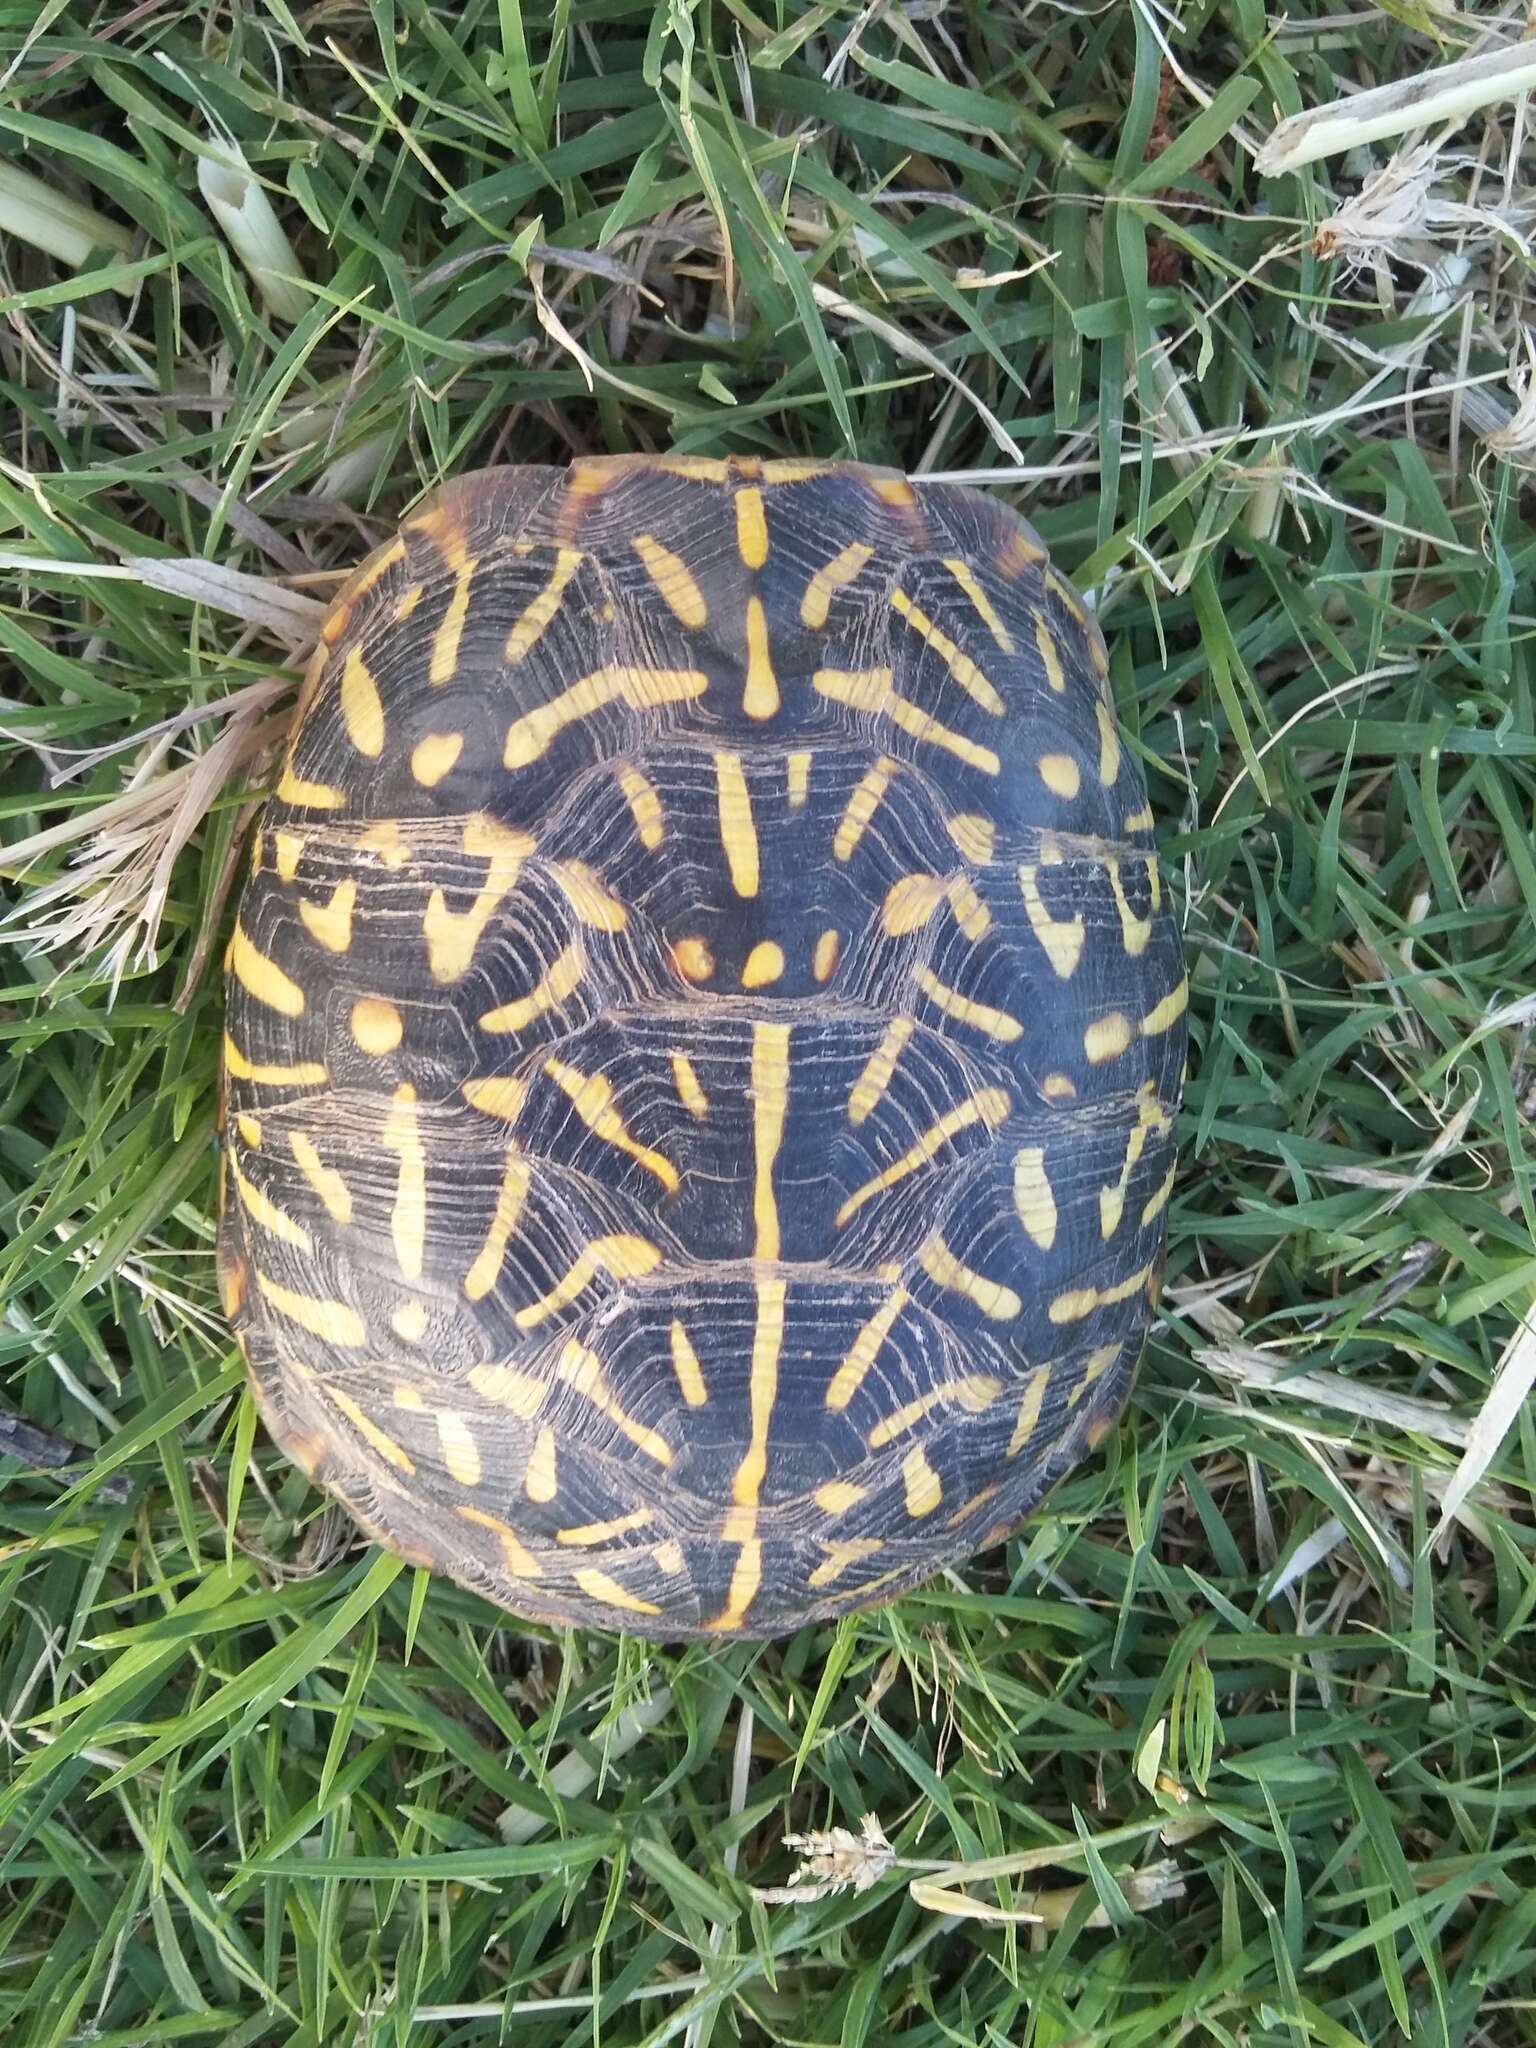 Image of Ornate box turtle